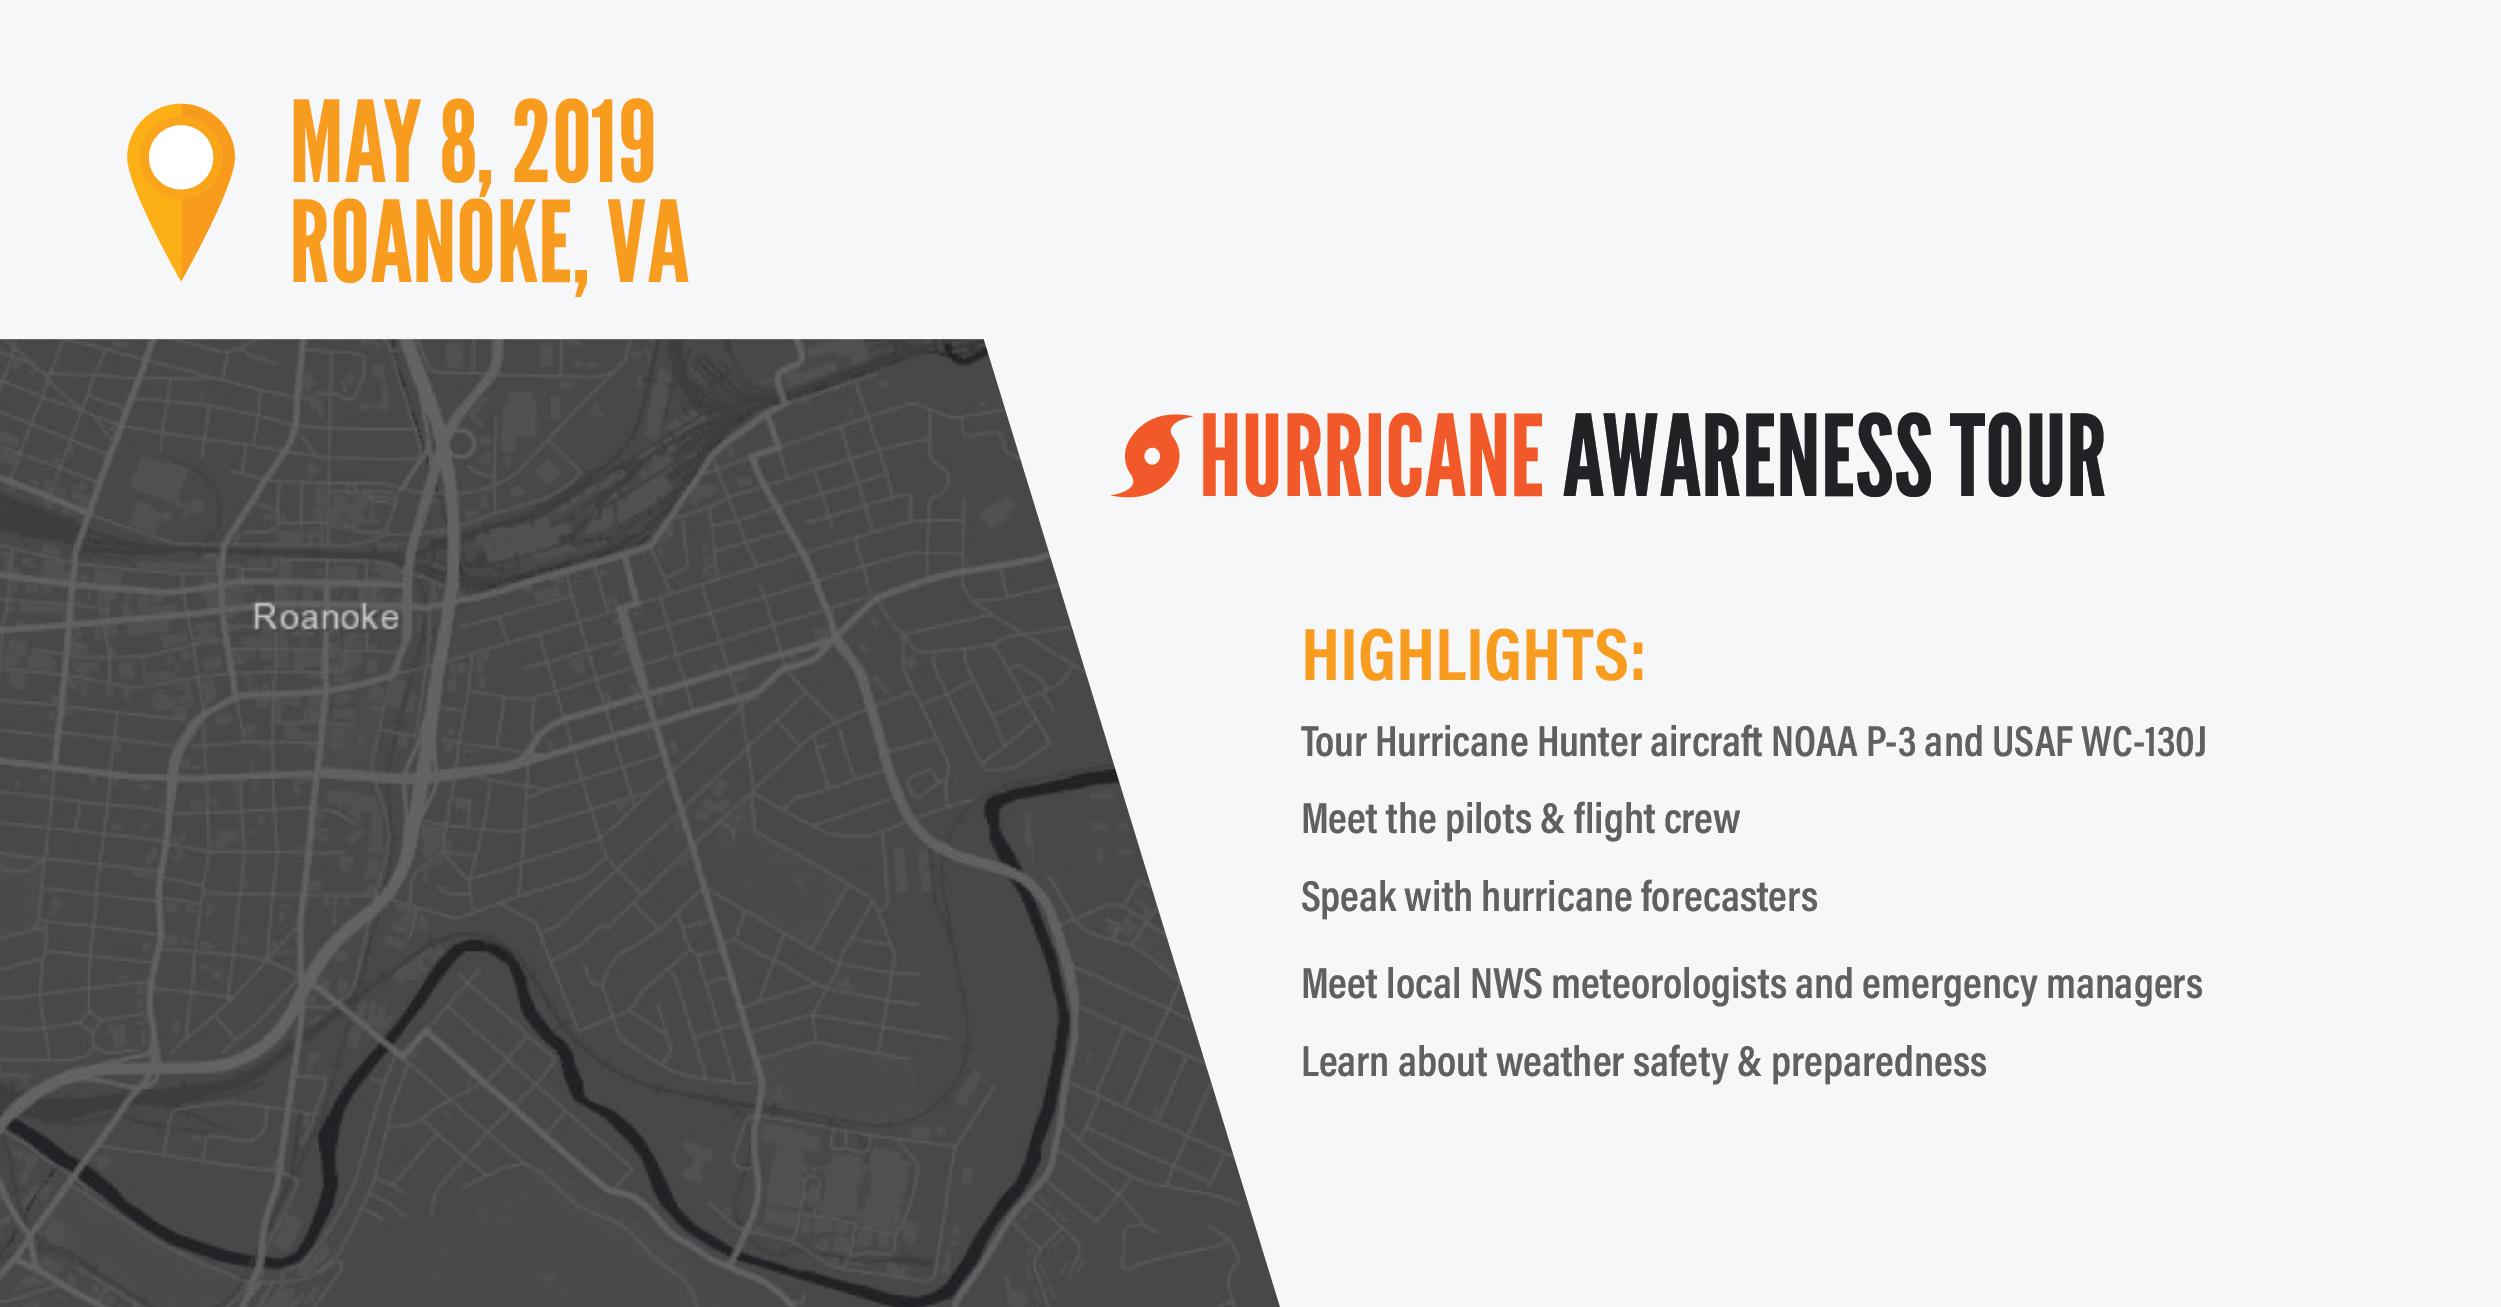 This image advertises the 2019 Hurricane Awareness Tour at Roanoke. Virginia